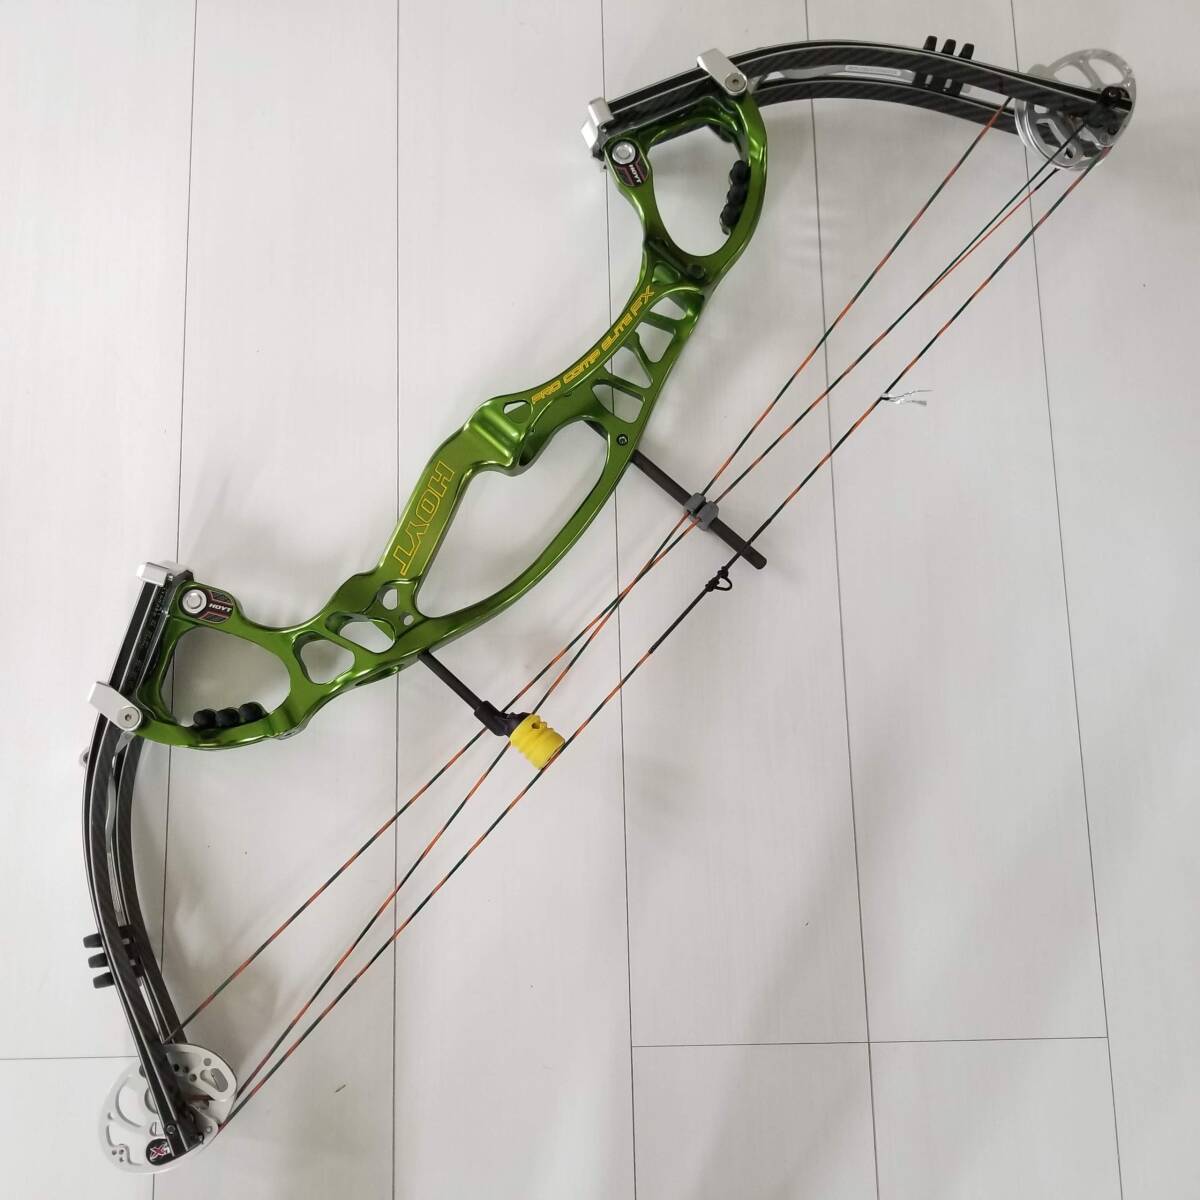  archery HOYT PRO COMP ELITE FX Compound bow 50-60 pound 26.5 -inch SPIRAL X cam 